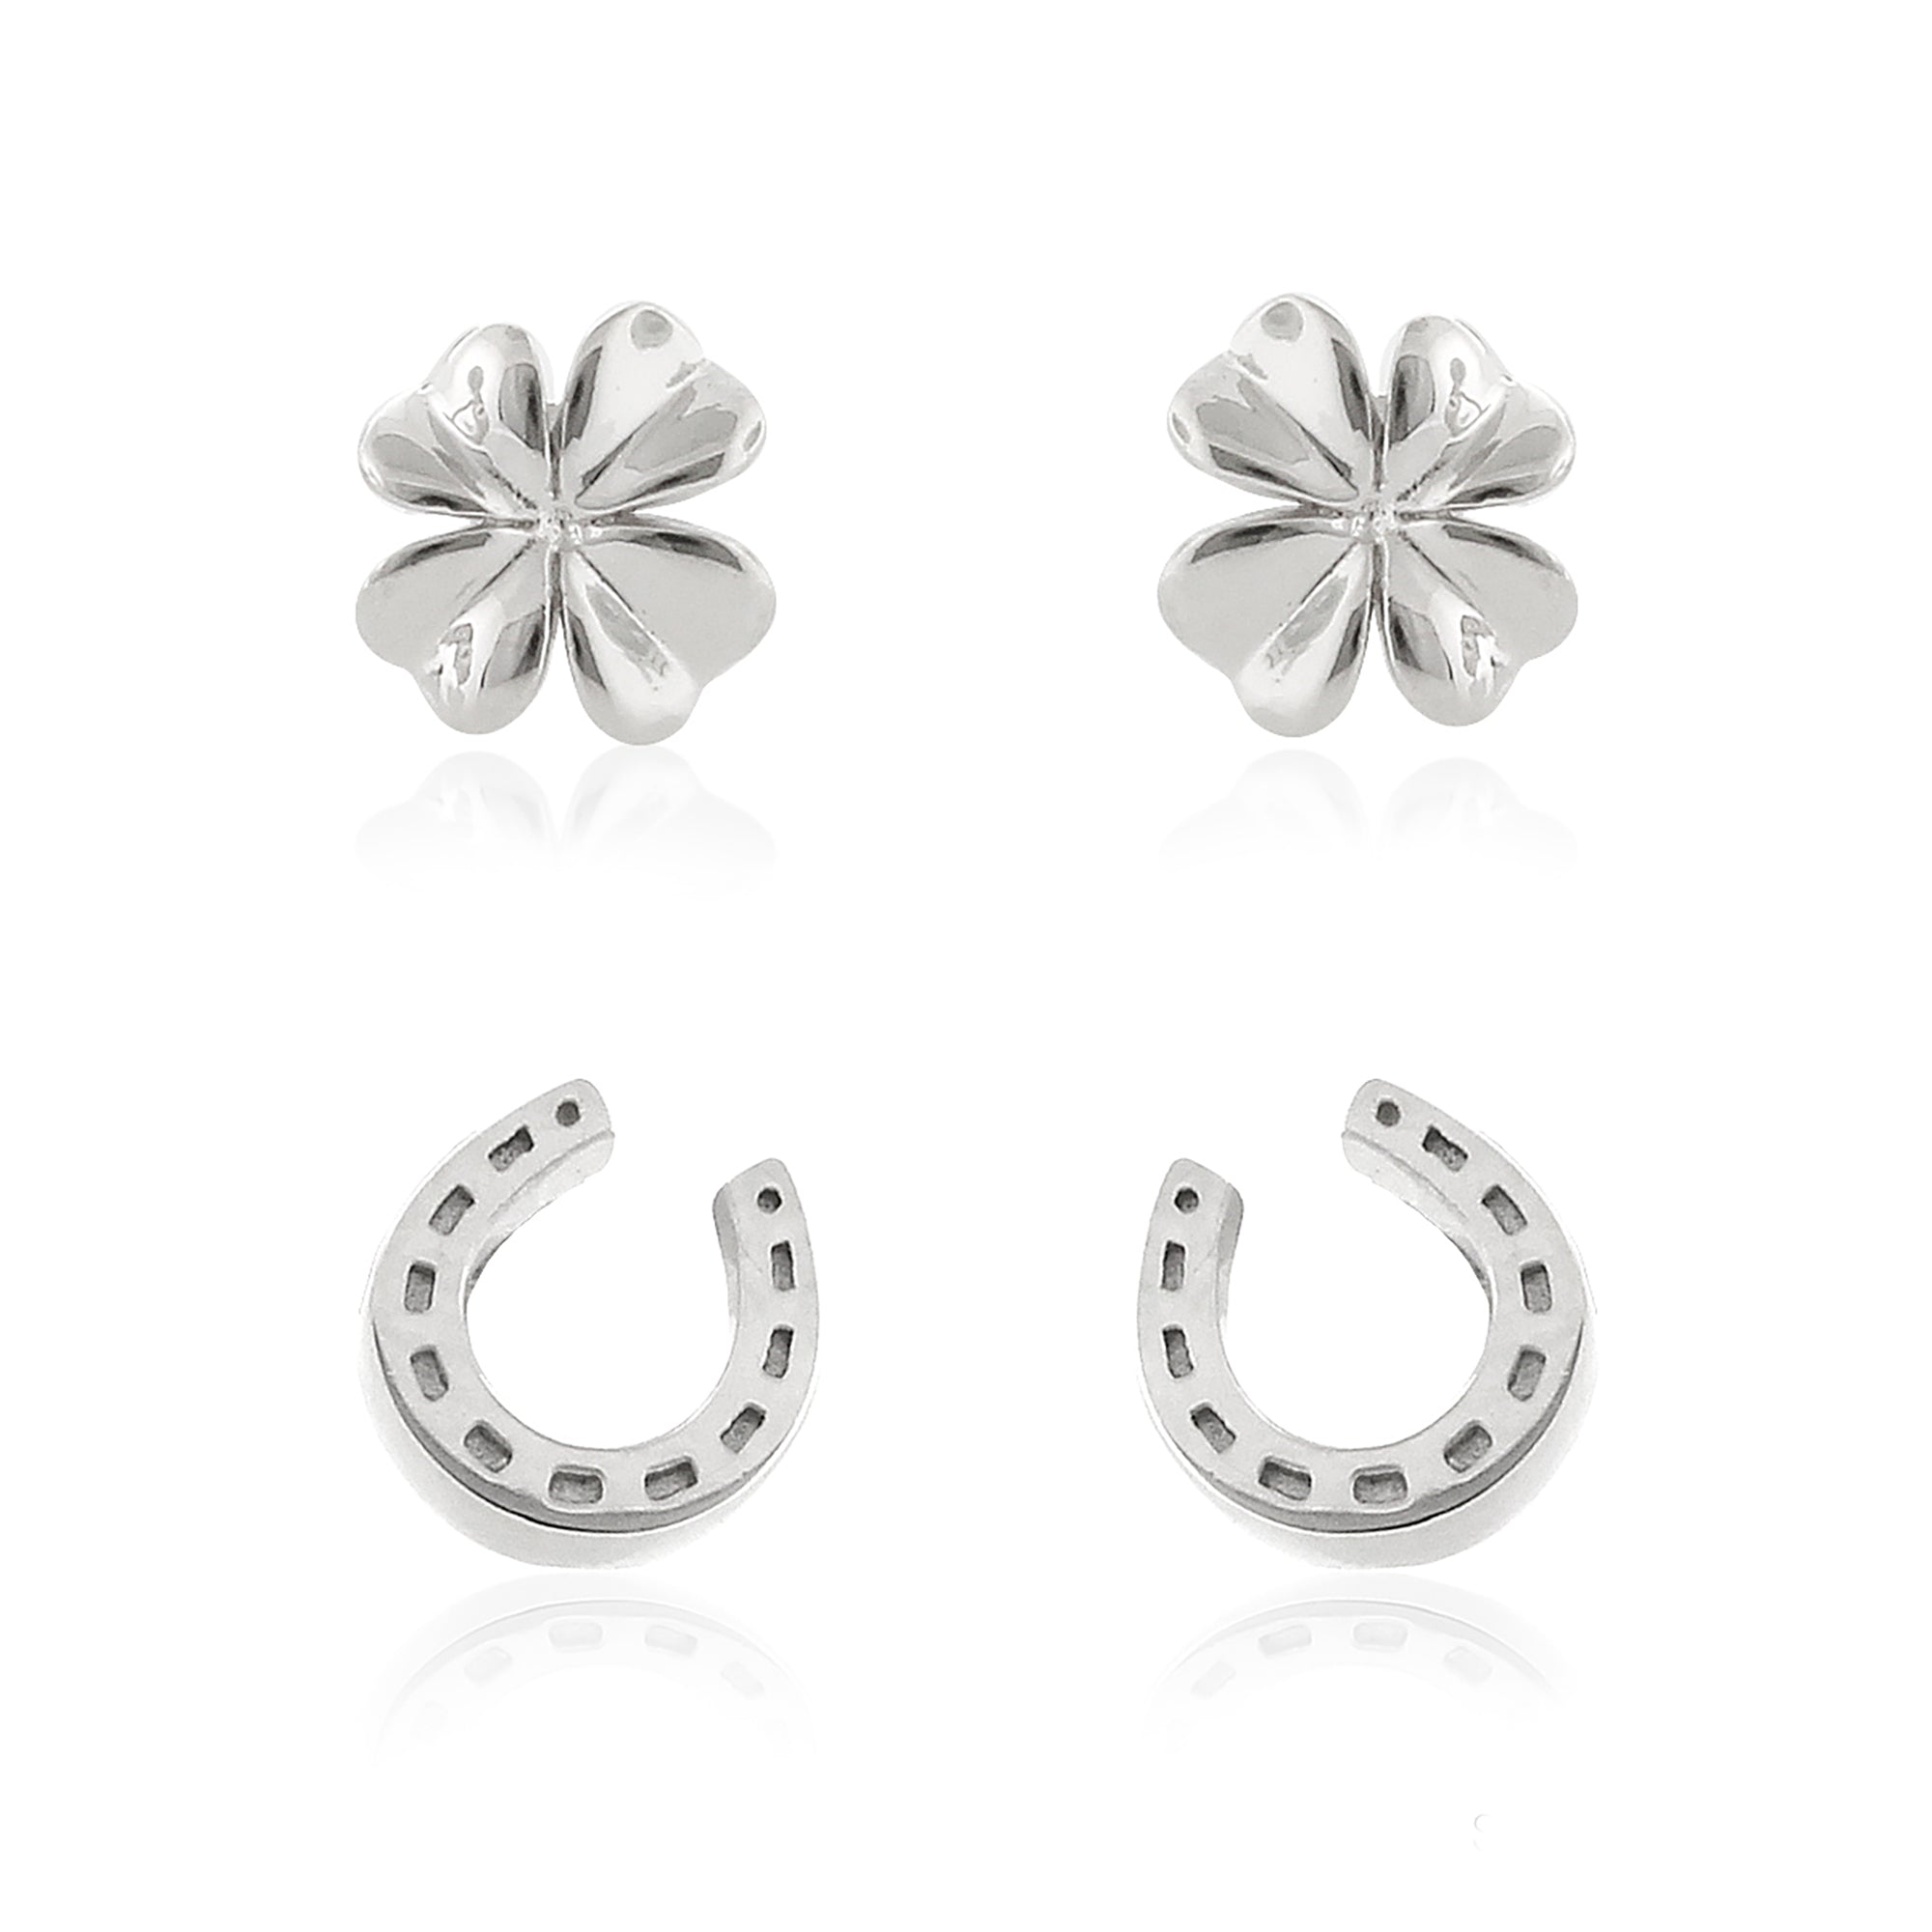 Sydney Leigh Clover and Horseshoe Earrings Set of 2